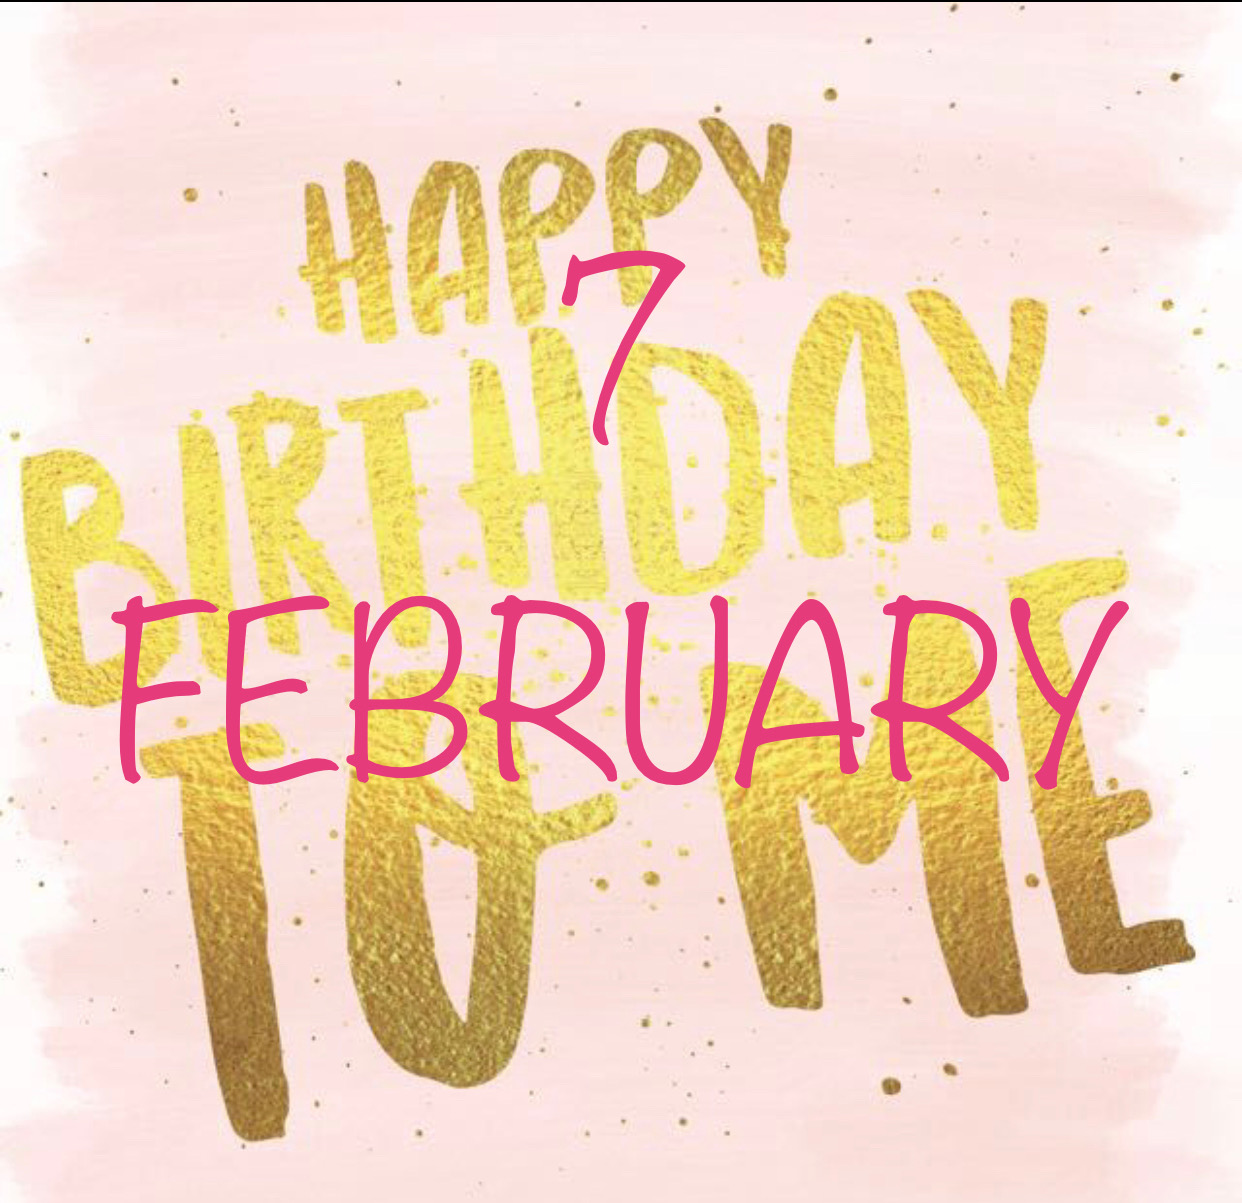 Milishanya My birthday is February 7th! image: 1